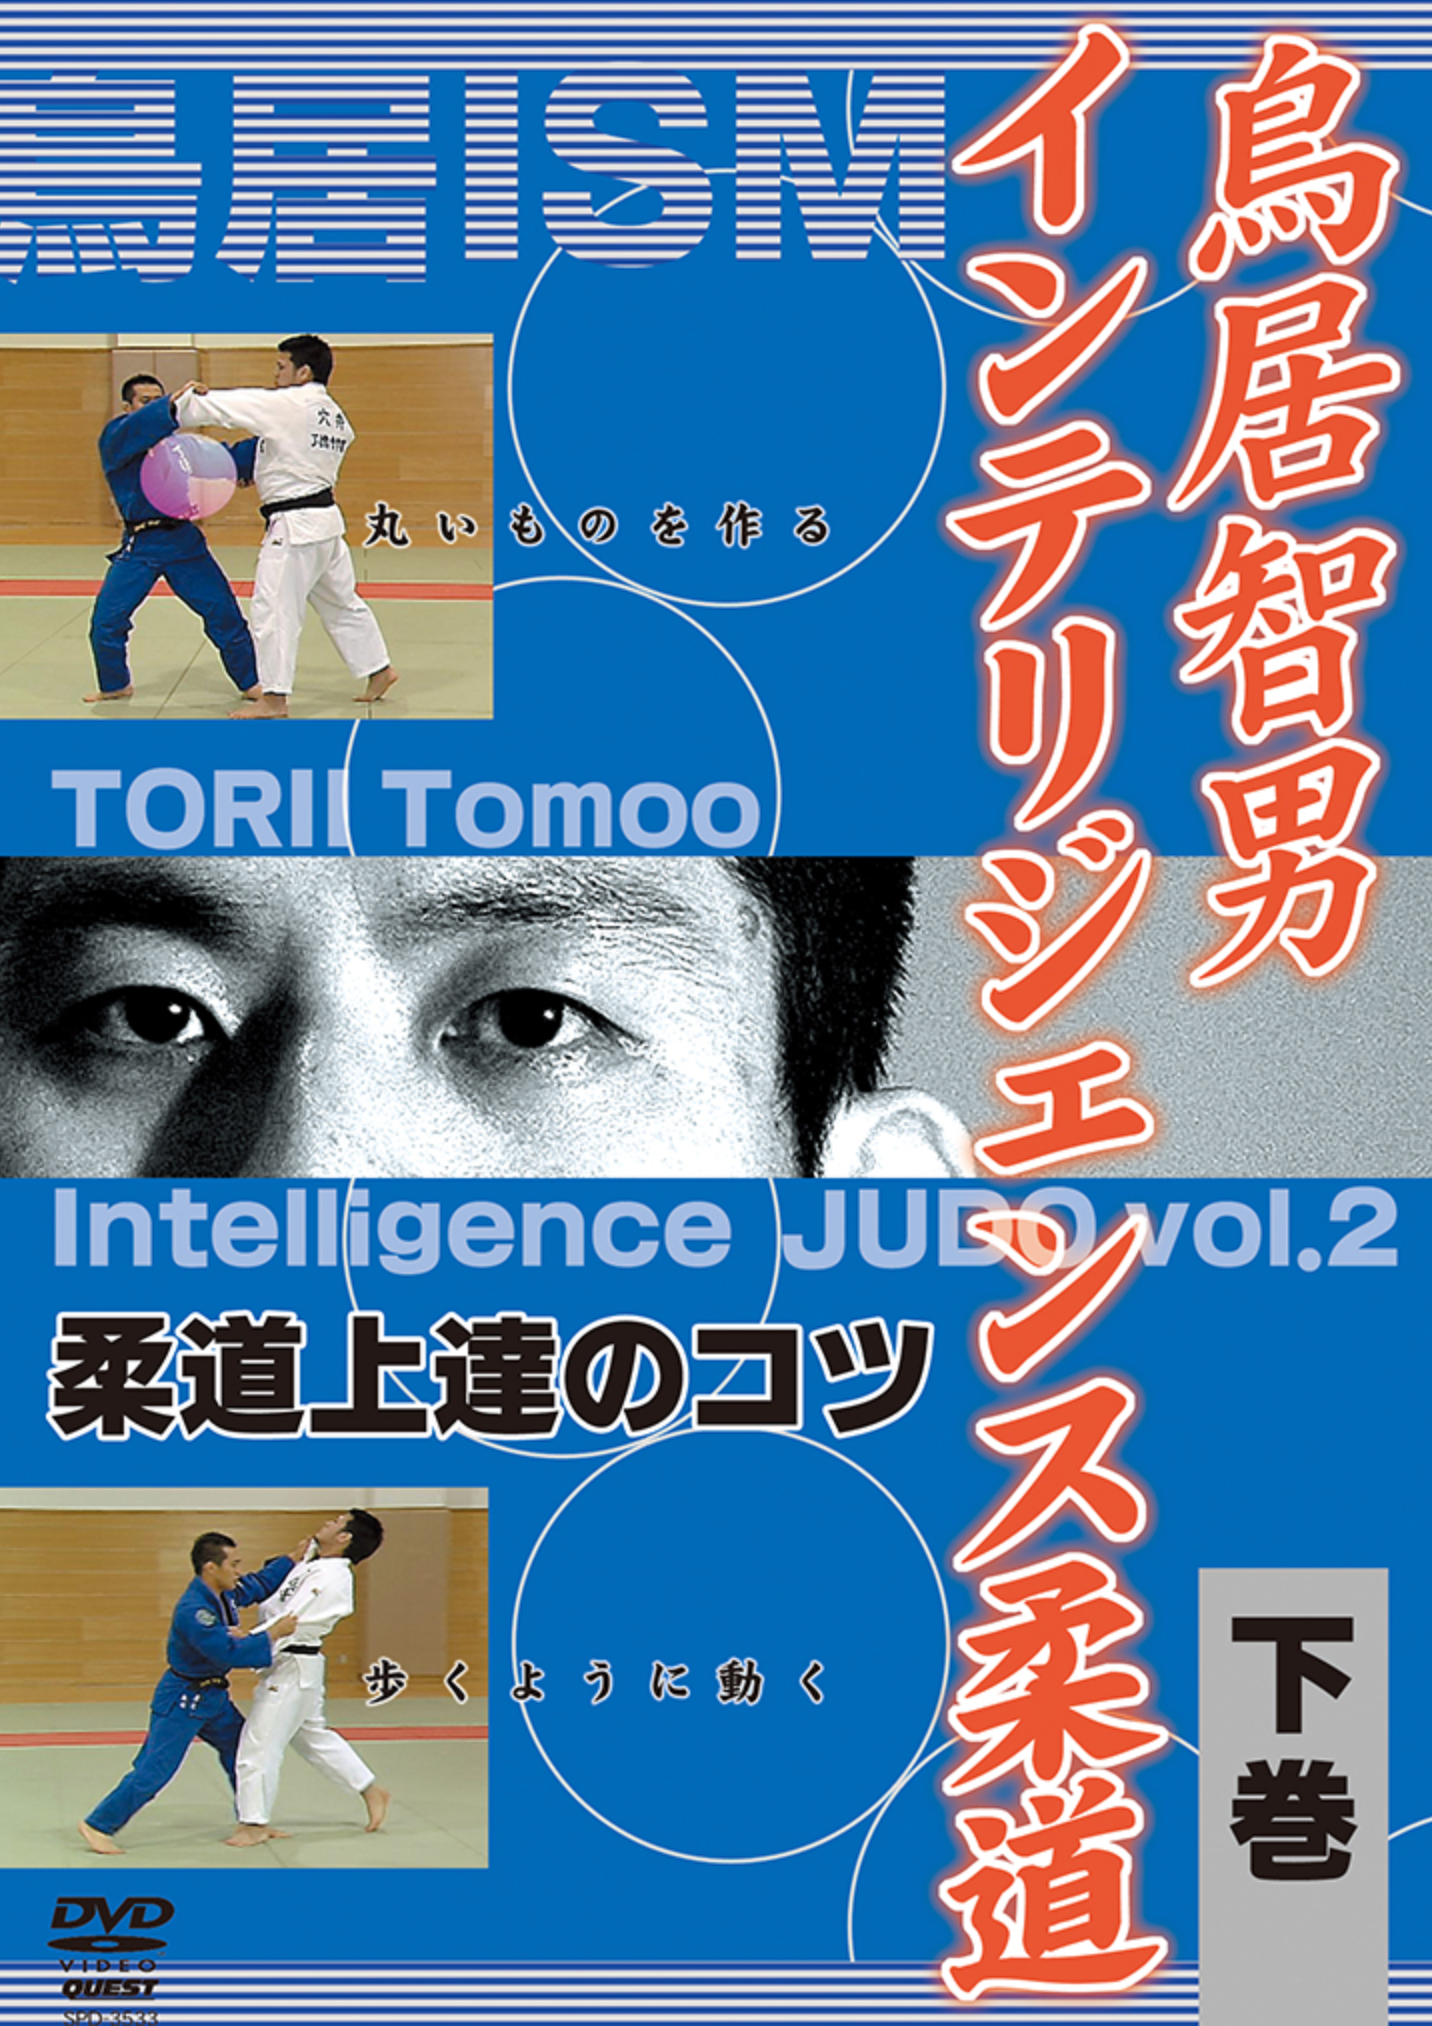 Intelligence Judo Tachiwaza DVD 2 with Tomoo Torii - Budovideos Inc